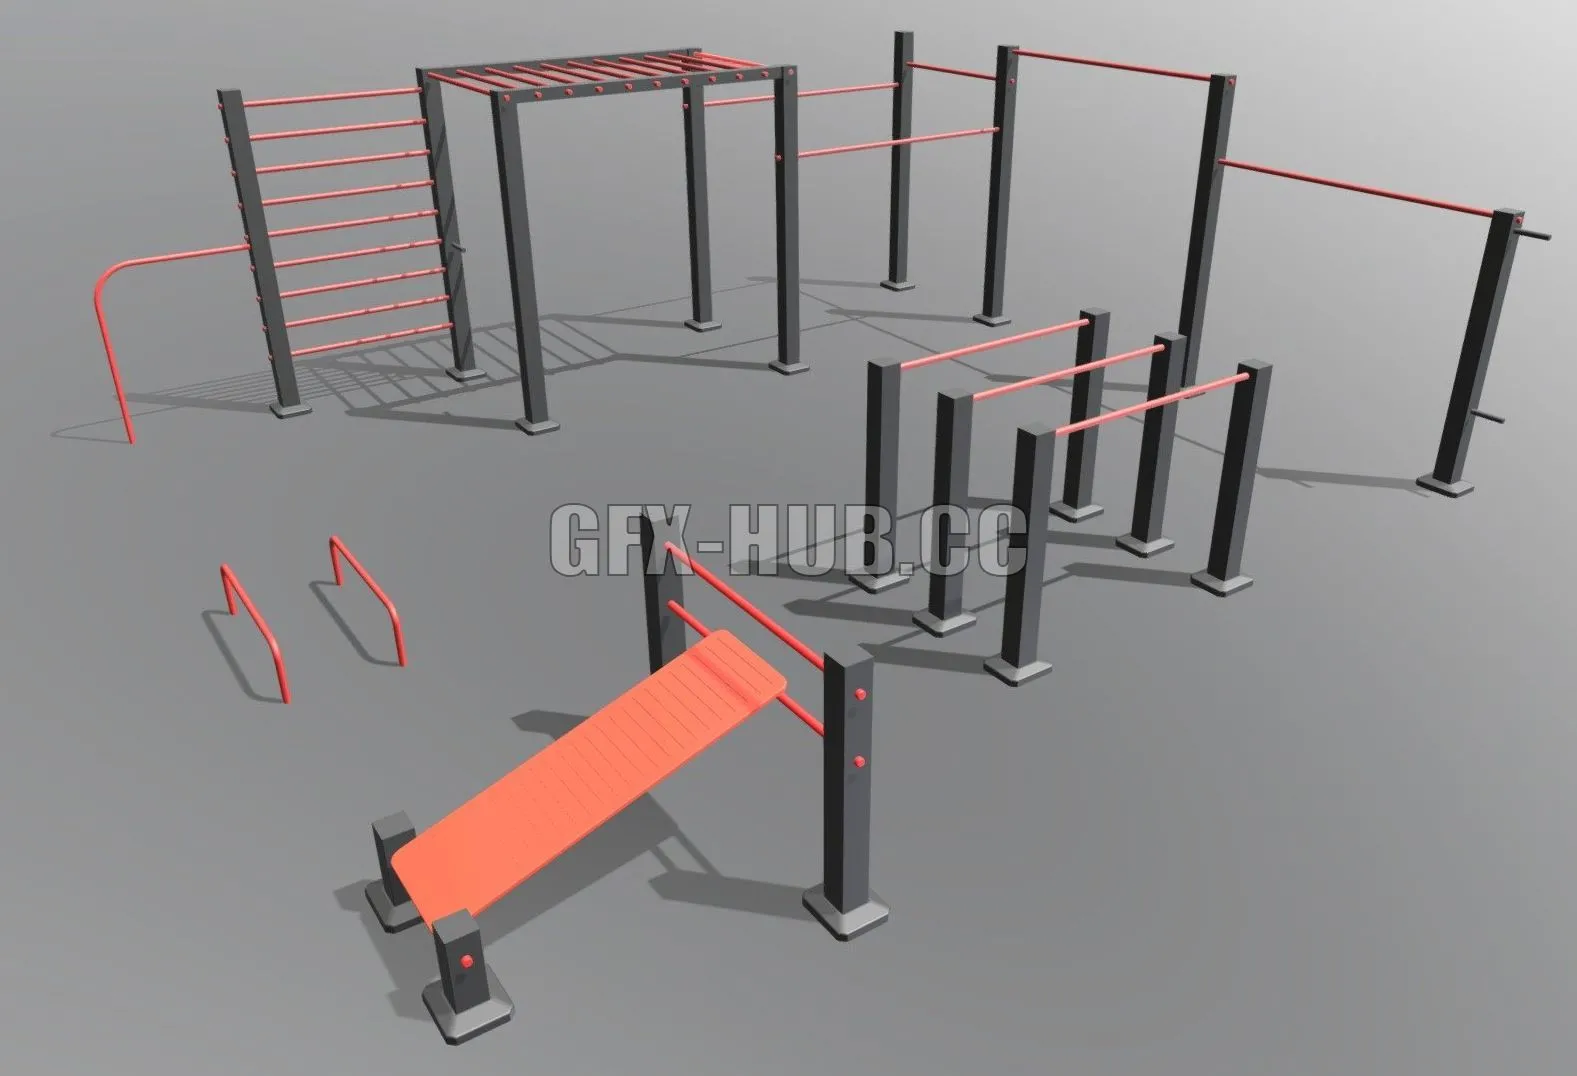 PBR Game 3D Model – Street Workout